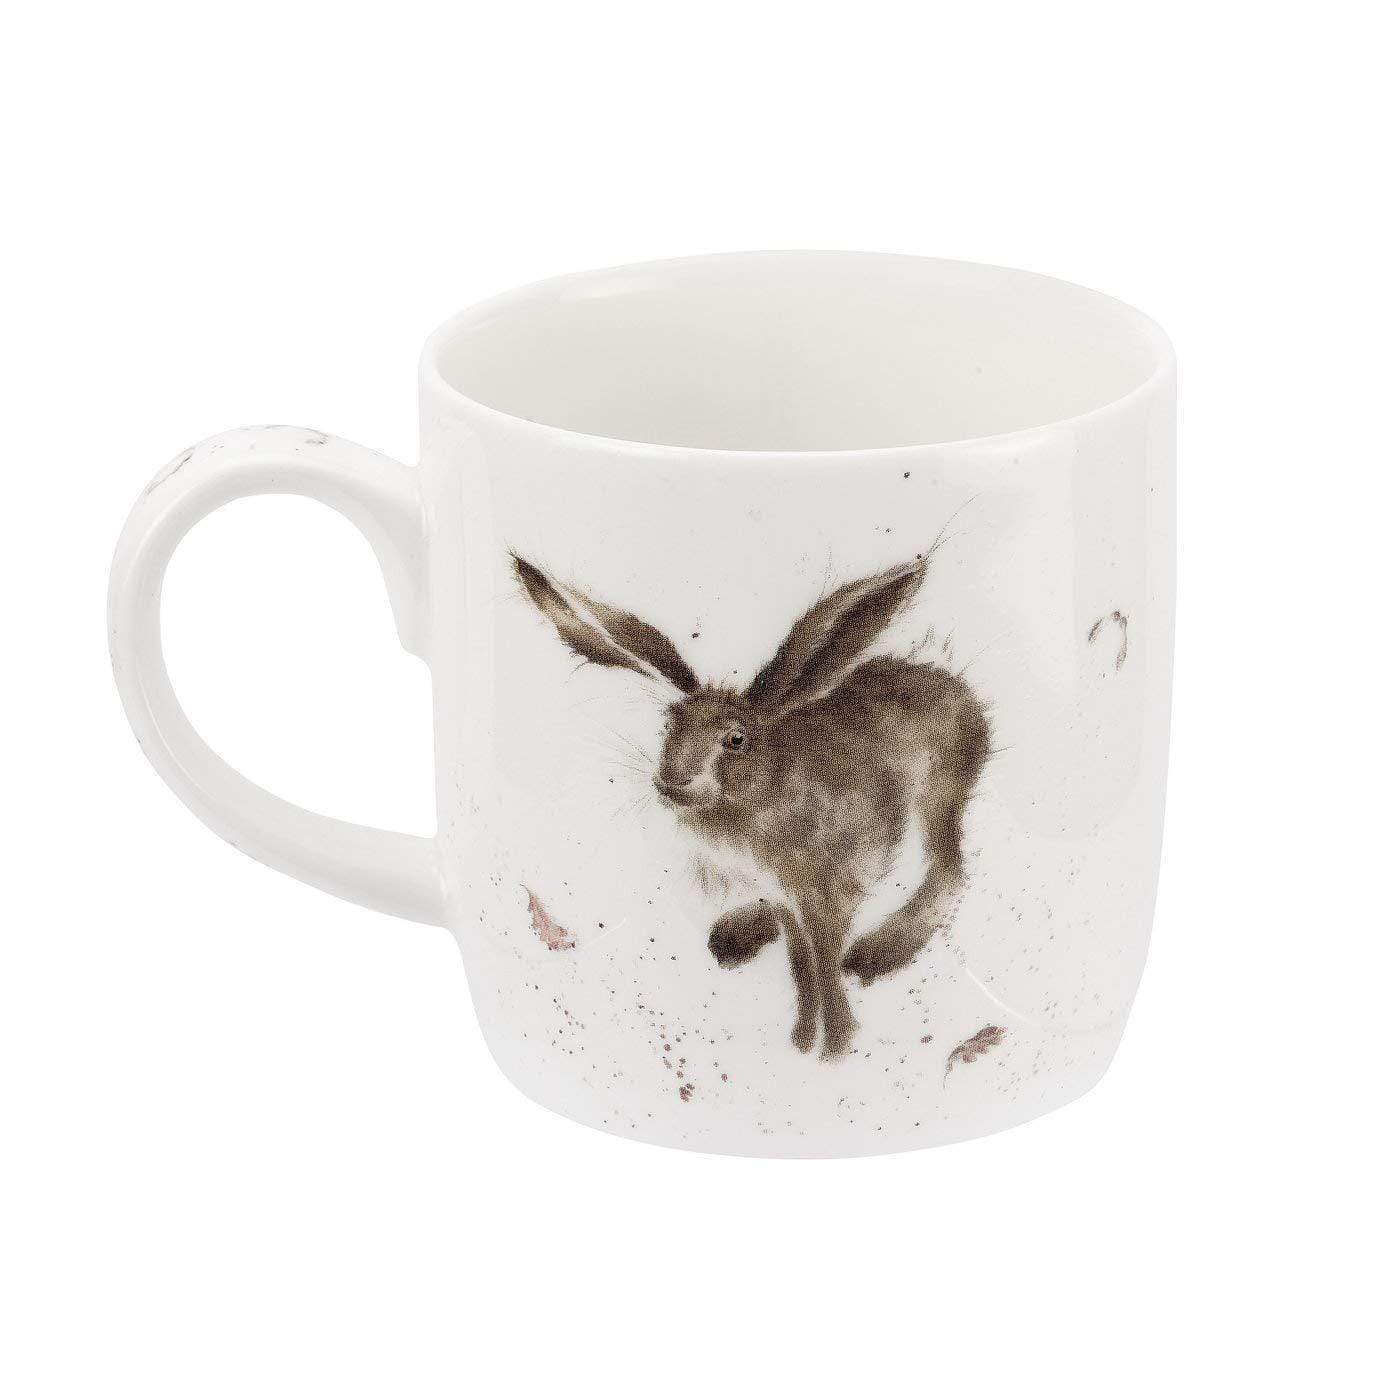 Wrendale Designs Mugs & Drinkware Country Animal Illustrated Mugs - Choice of designs